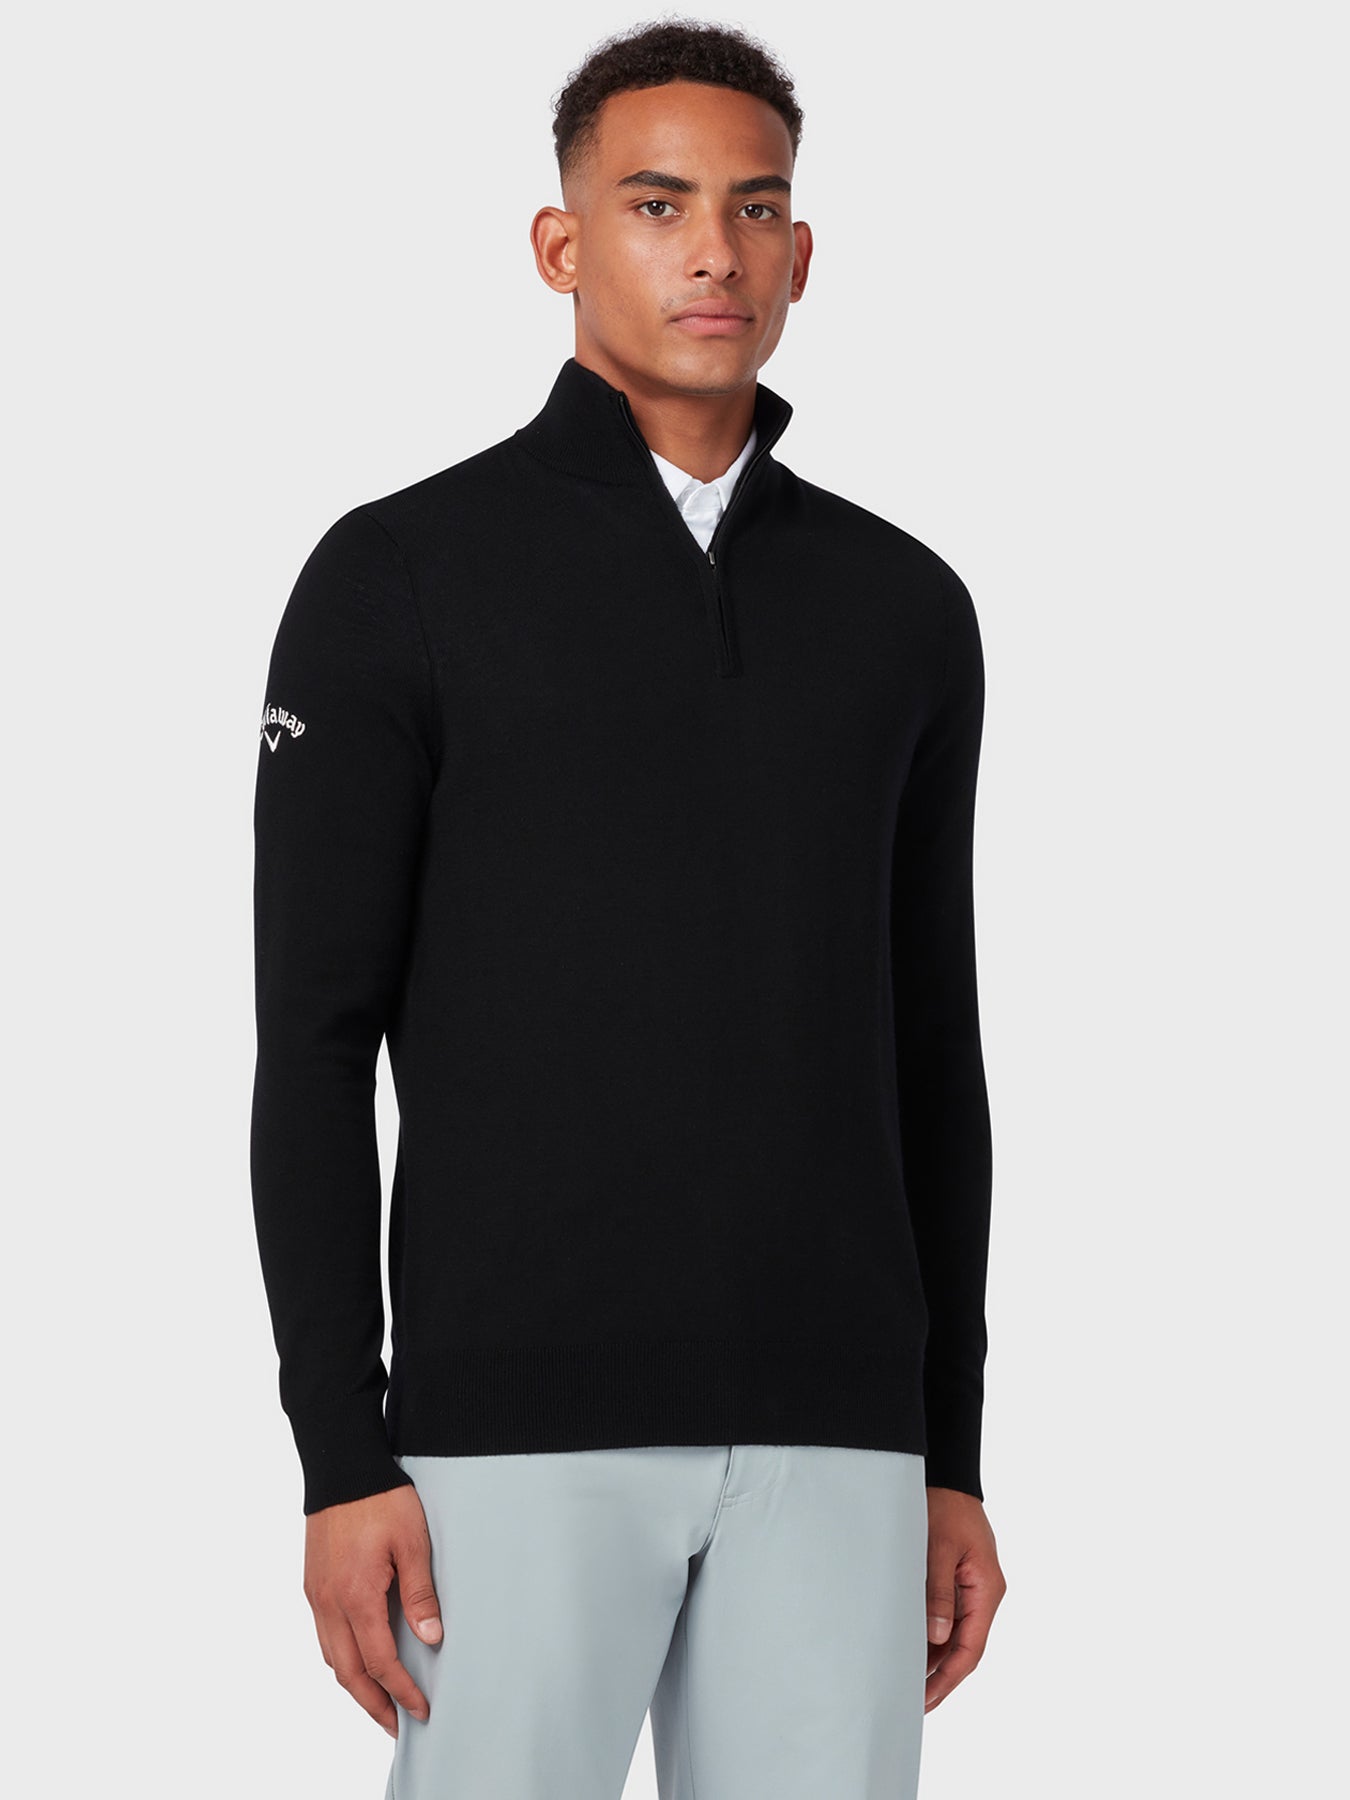 View Thermal Merino Wool Quarter Zip Sweater In Black Onyx Black Onyx S information